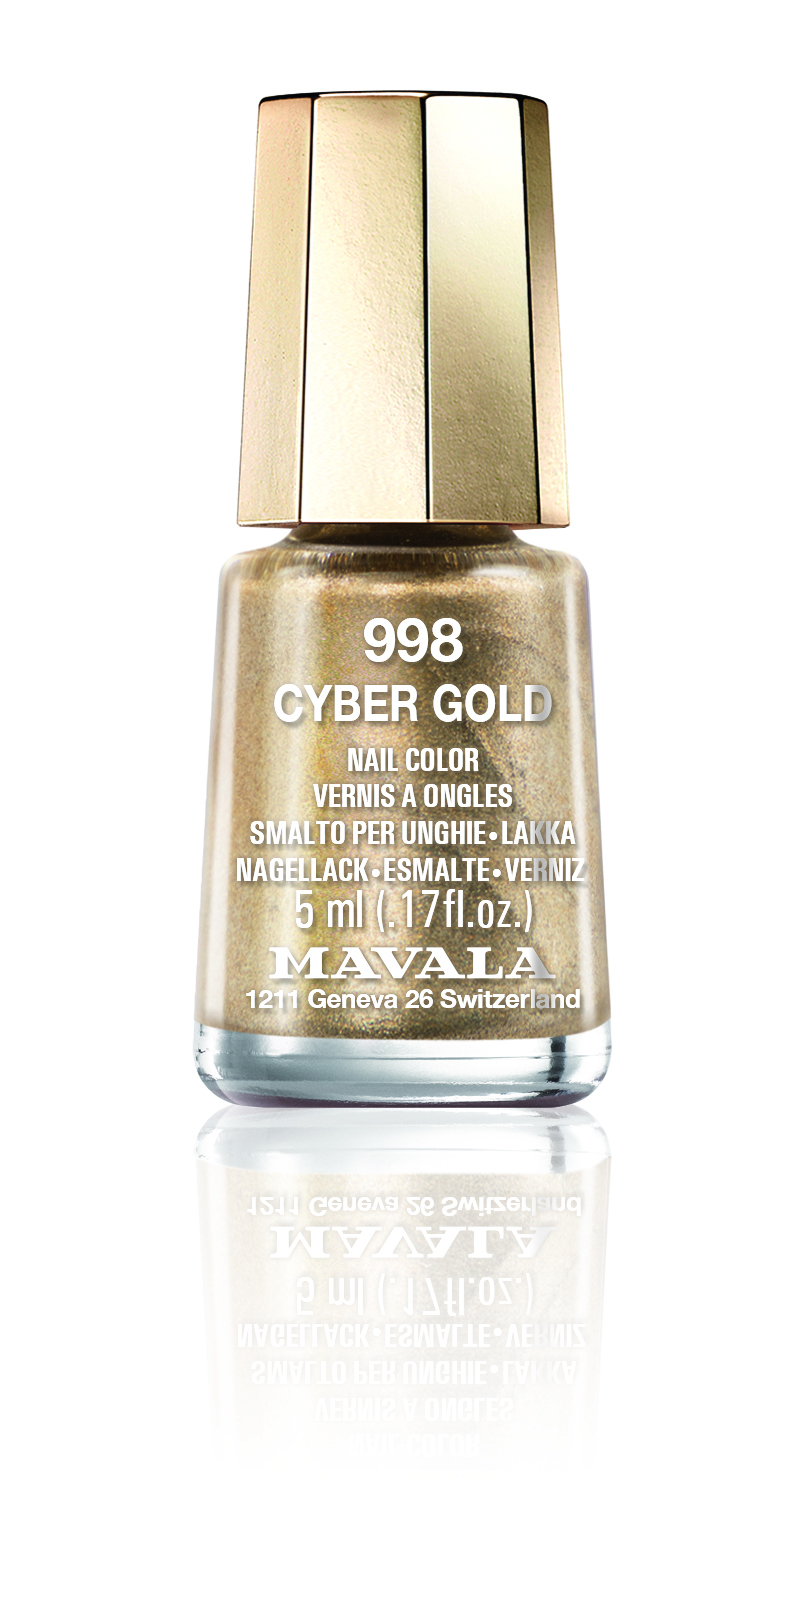 Mavala Cyber Gold nail polish